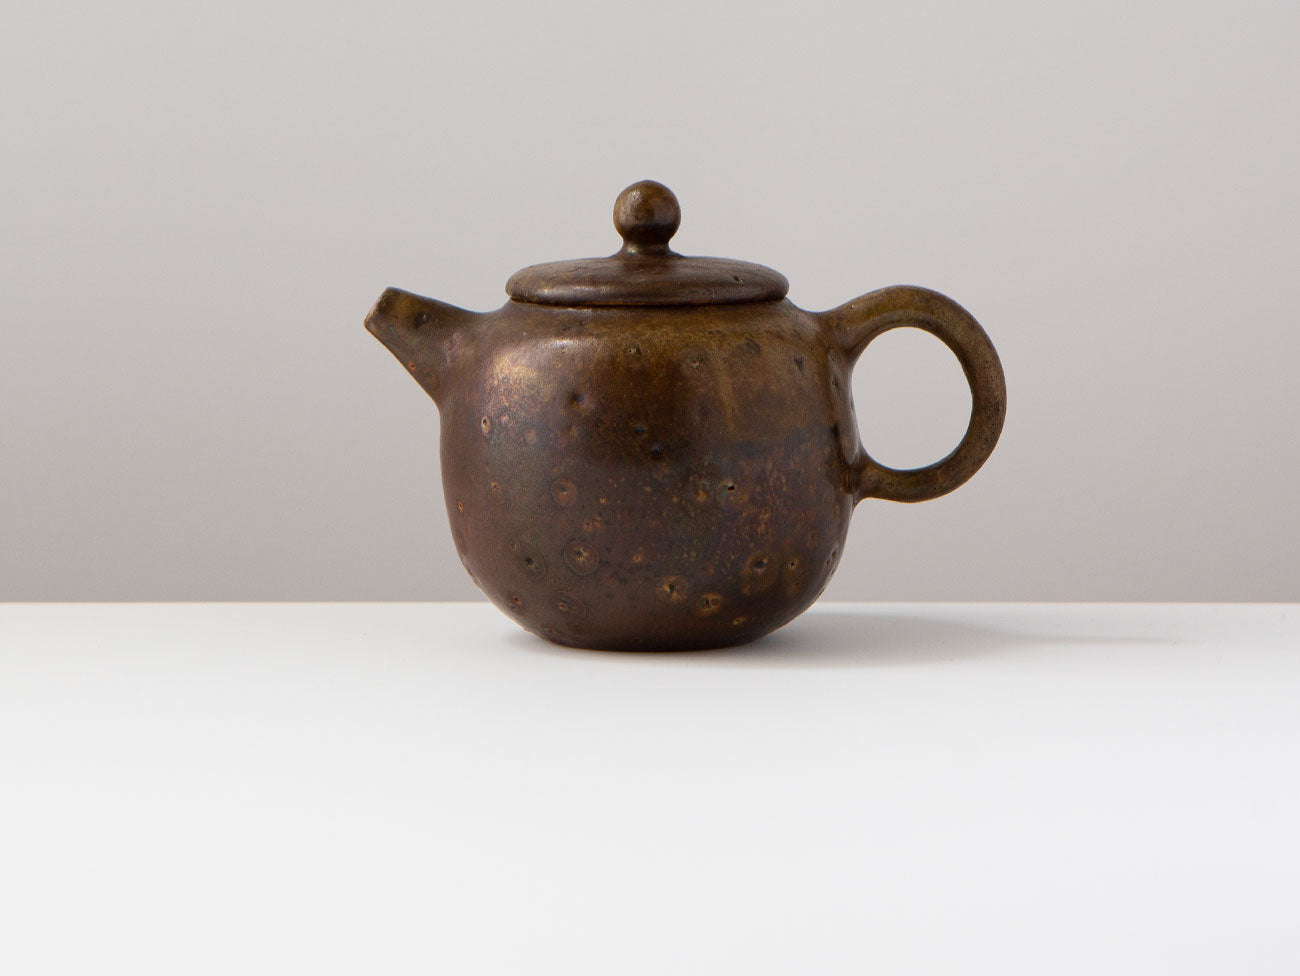 Wood-fired teapot, Calder. Liao Guo Hua.